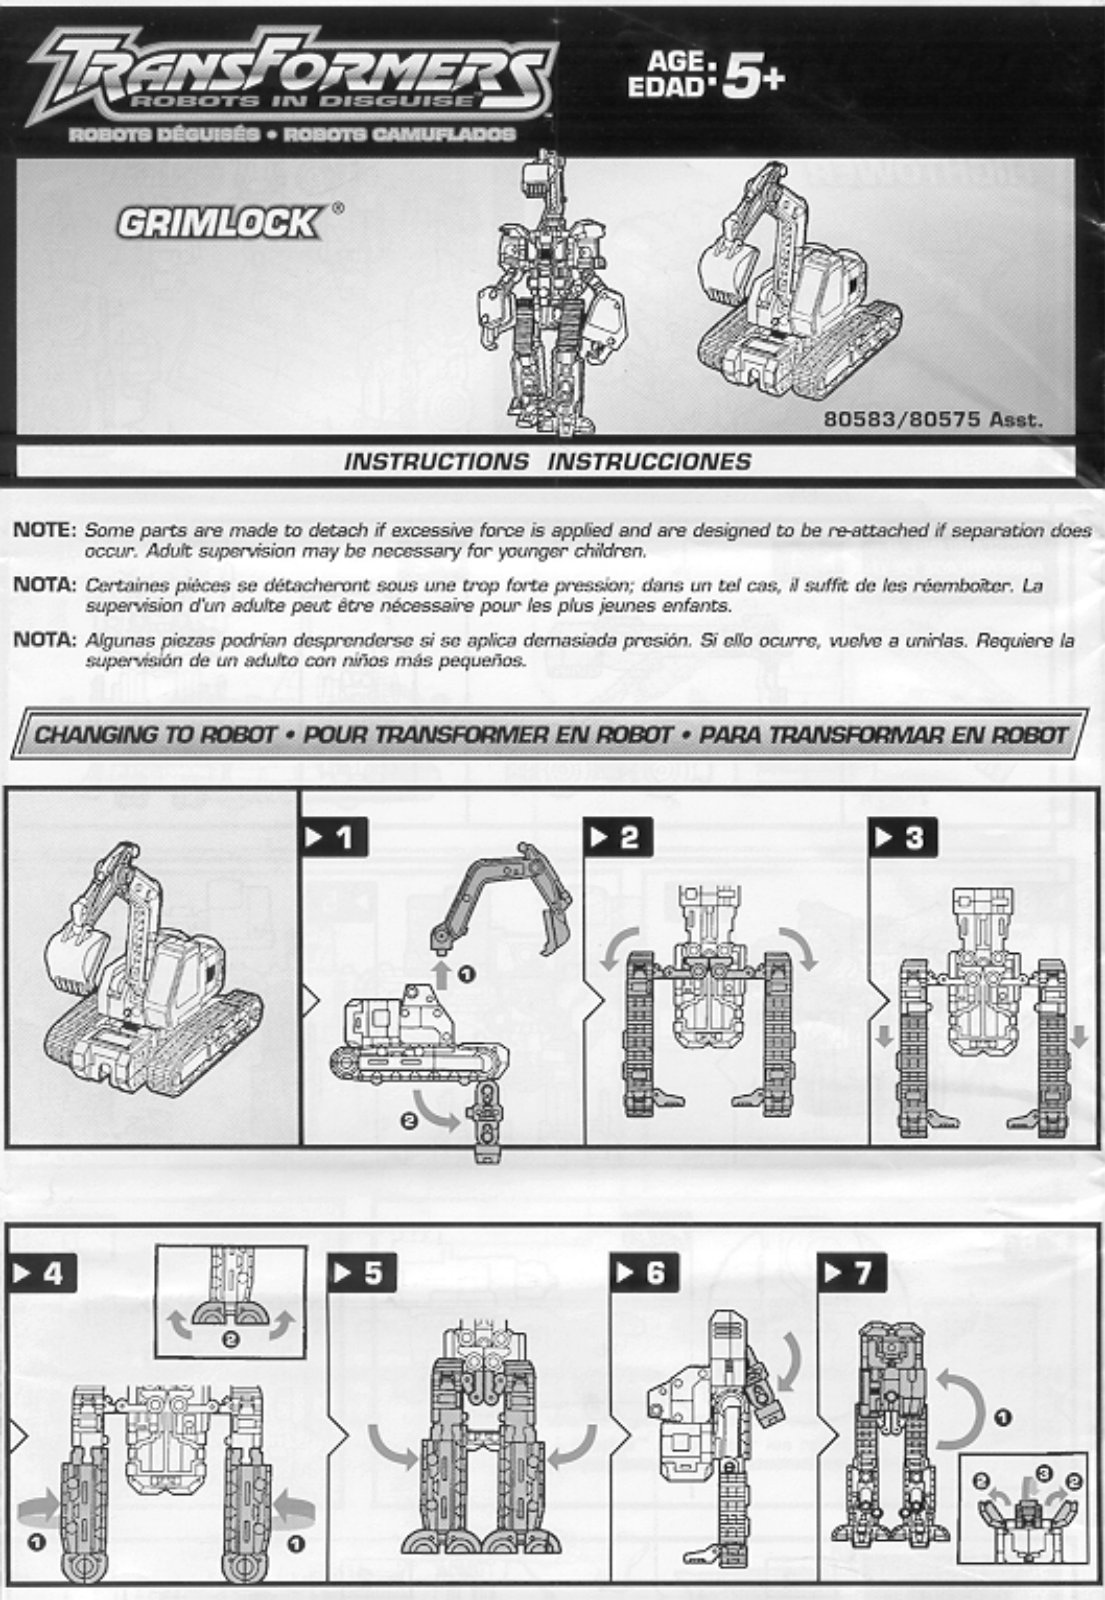 HASBRO Transformers Robots in Disguise Grimlock User Manual